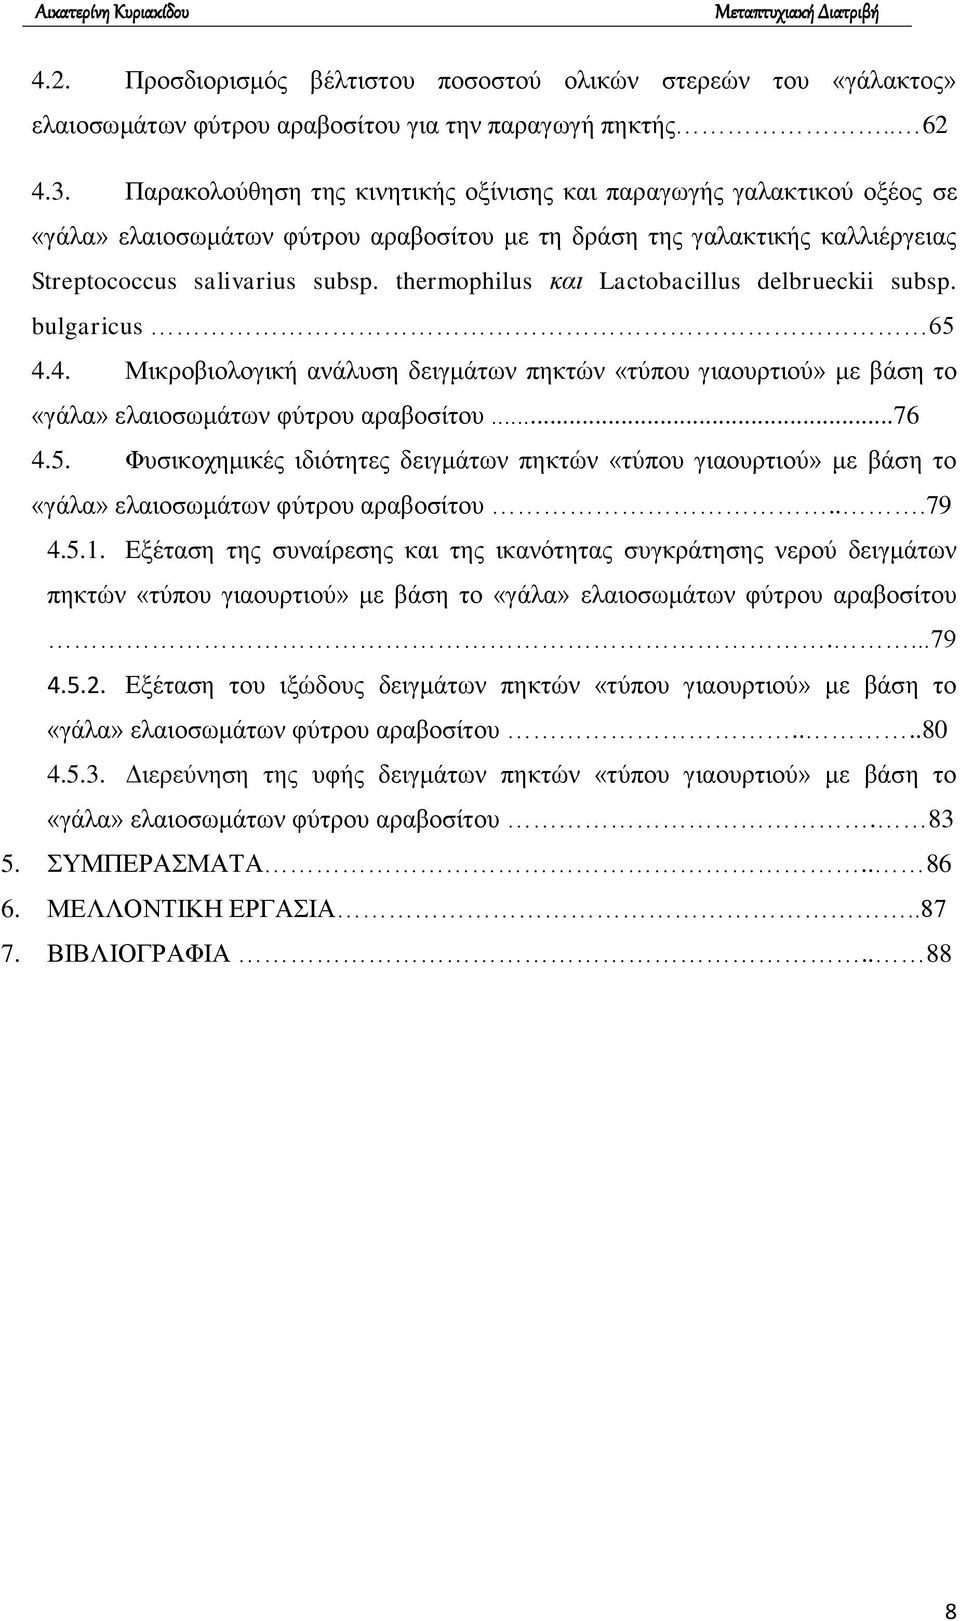 thermophilus και Lactobacillus delbrueckii subsp. bulgaricus 65 4.4. Μικροβιολογική ανάλυση δειγμάτων πηκτών «τύπου γιαουρτιού» με βάση το «γάλα» ελαιοσωμάτων φύτρου αραβοσίτου...76 4.5. Φυσικοχημικές ιδιότητες δειγμάτων πηκτών «τύπου γιαουρτιού» με βάση το «γάλα» ελαιοσωμάτων φύτρου αραβοσίτου.